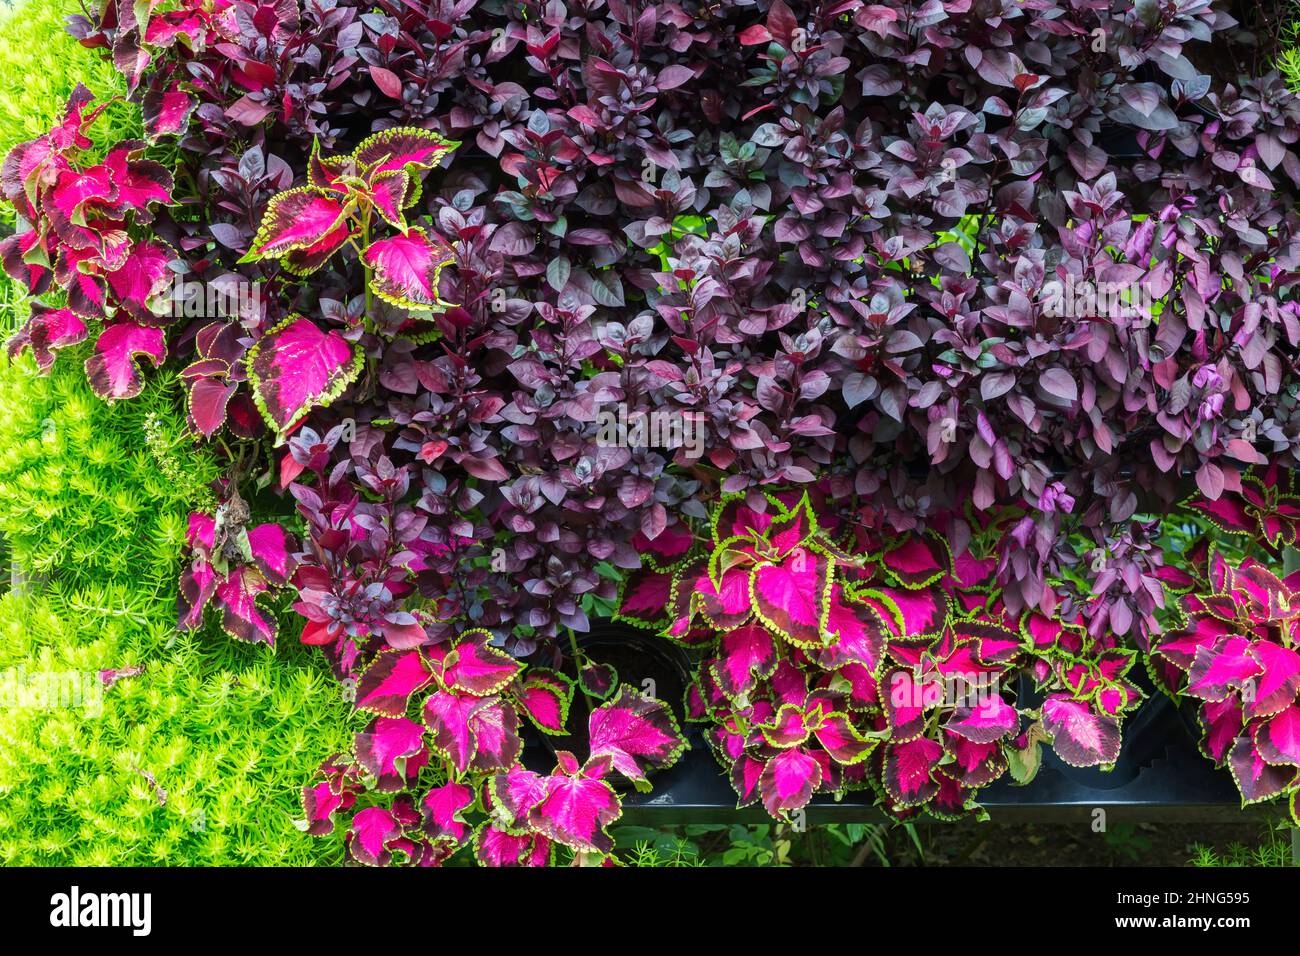 Vertical gardening wall with purple variegated Solenostemon - Coleus, Alternanthera 'Little Ruby' and Sedum reflexum 'Angelina' - Stonecrop plants. Stock Photo